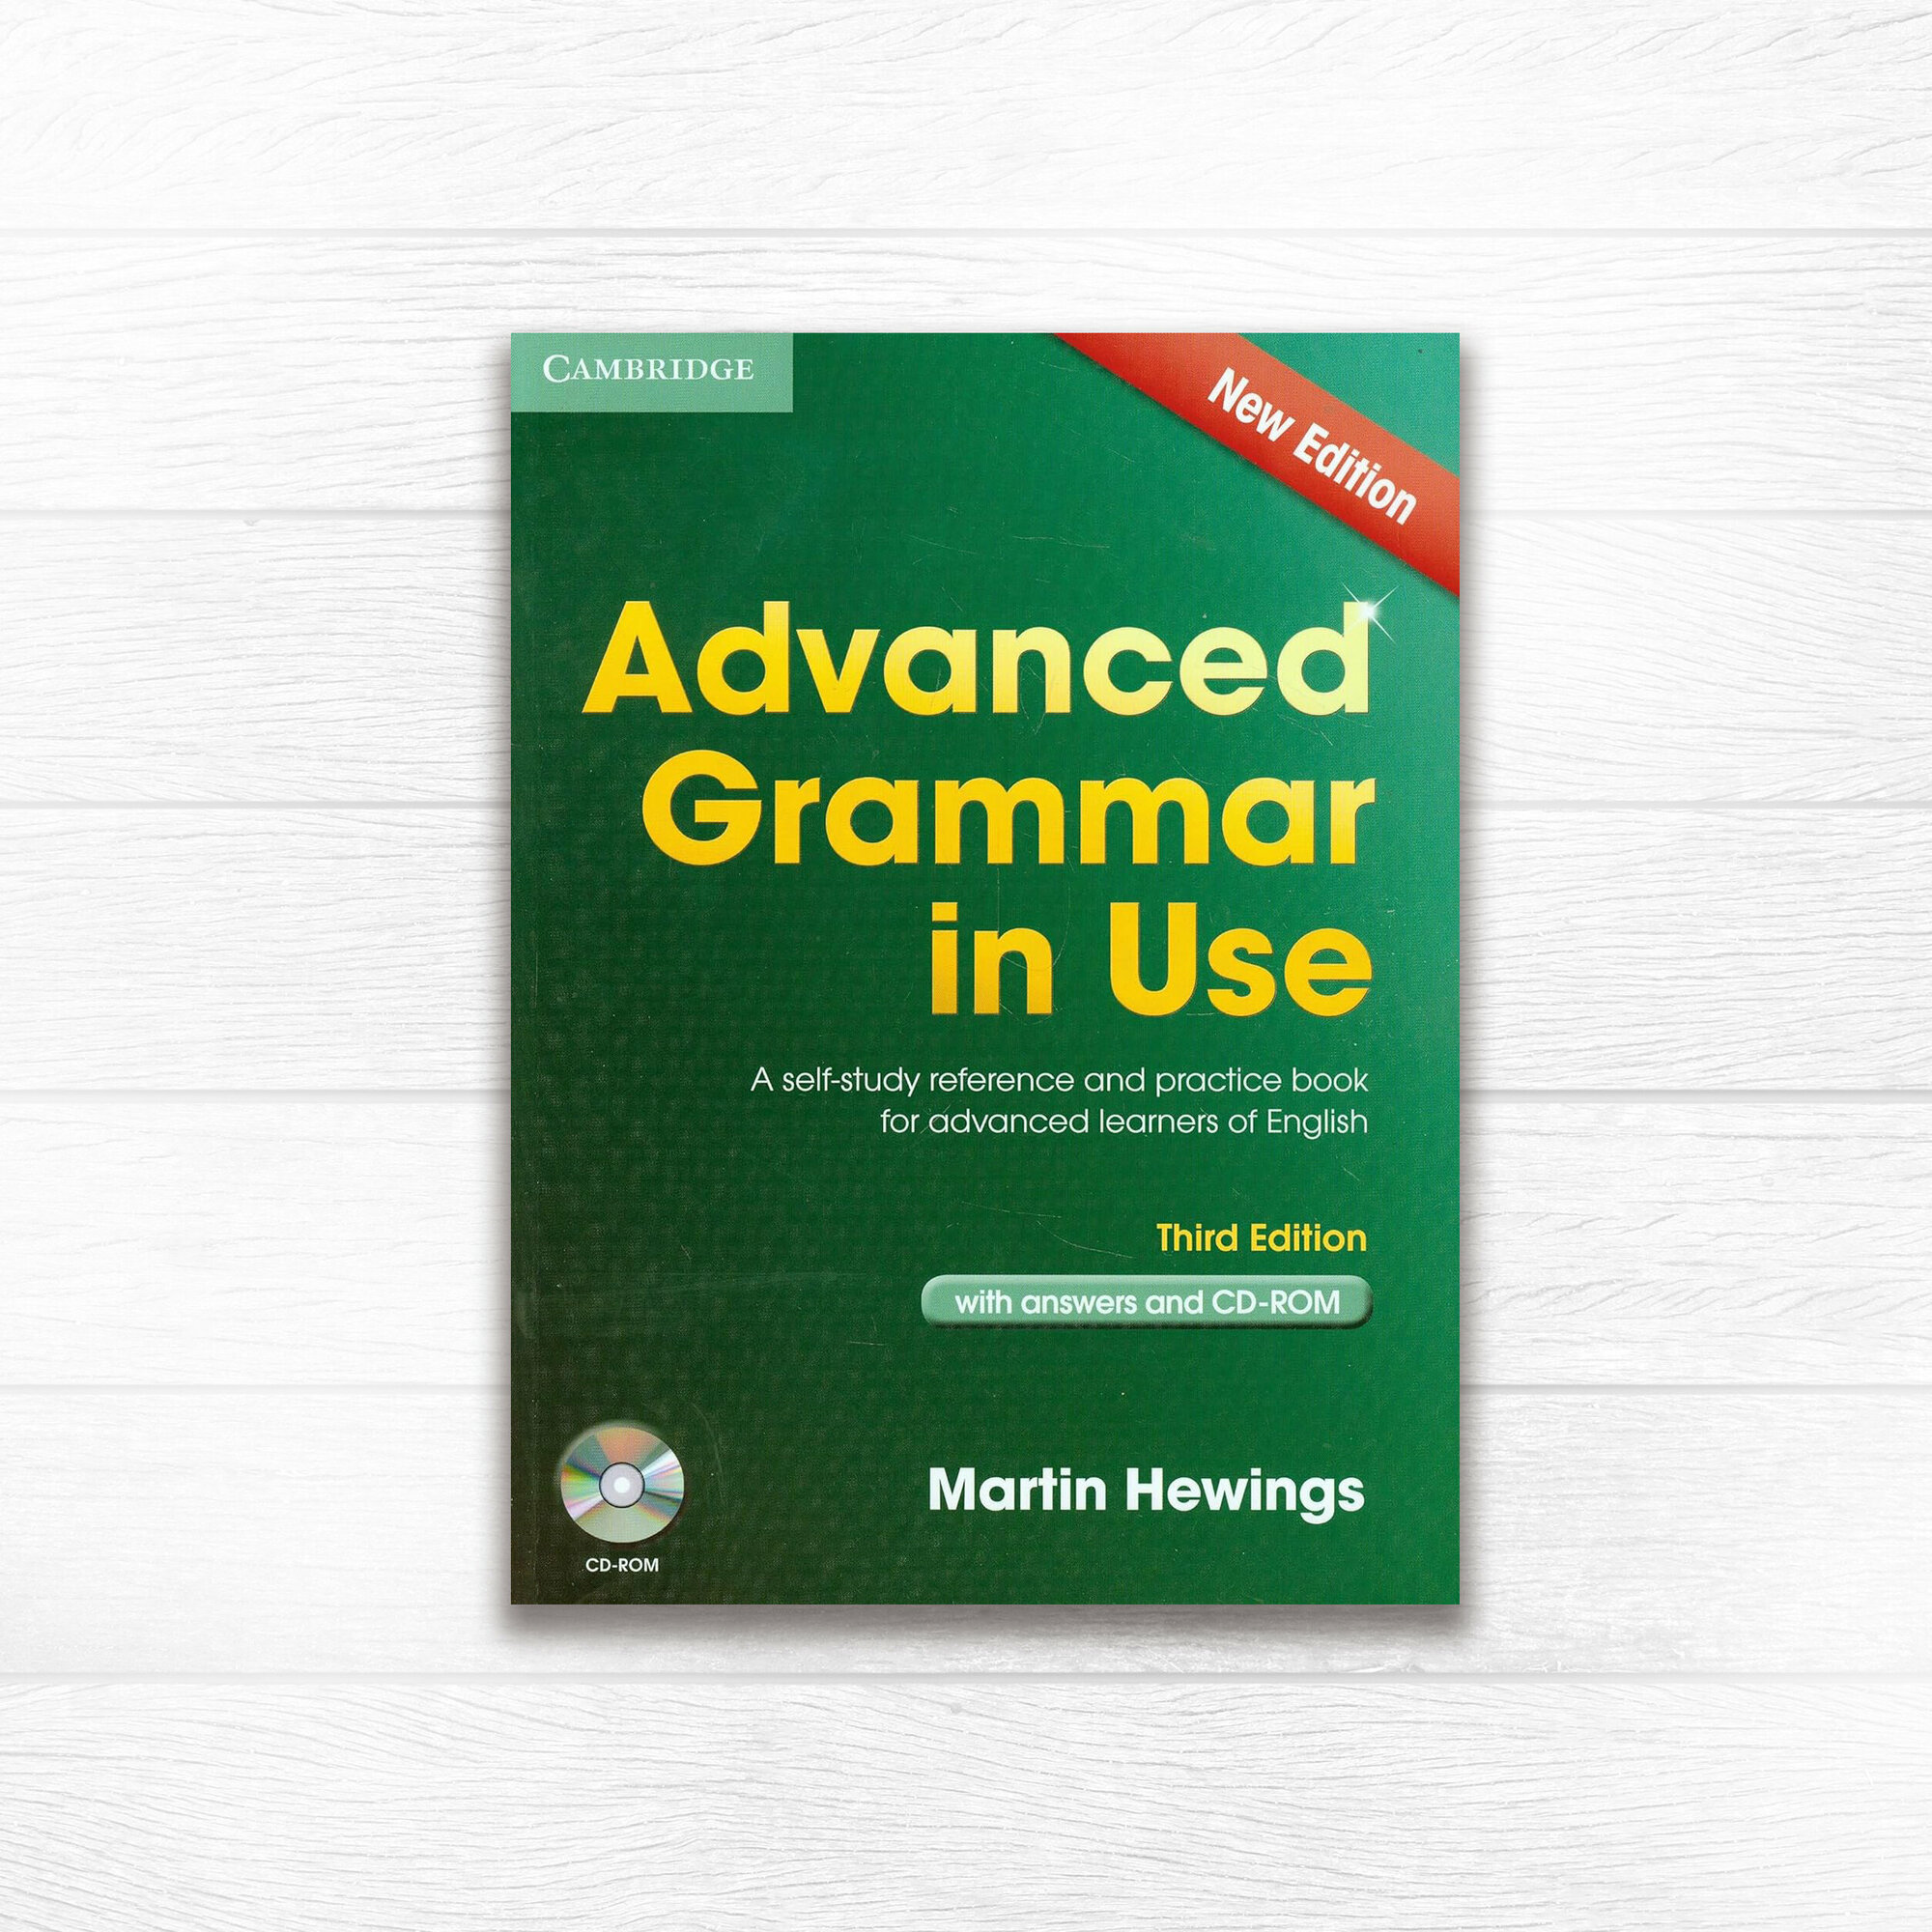 Advanced Grammar in Use Third Edition with Answers, грамматика английского языка с ответами для студентов и взрослых